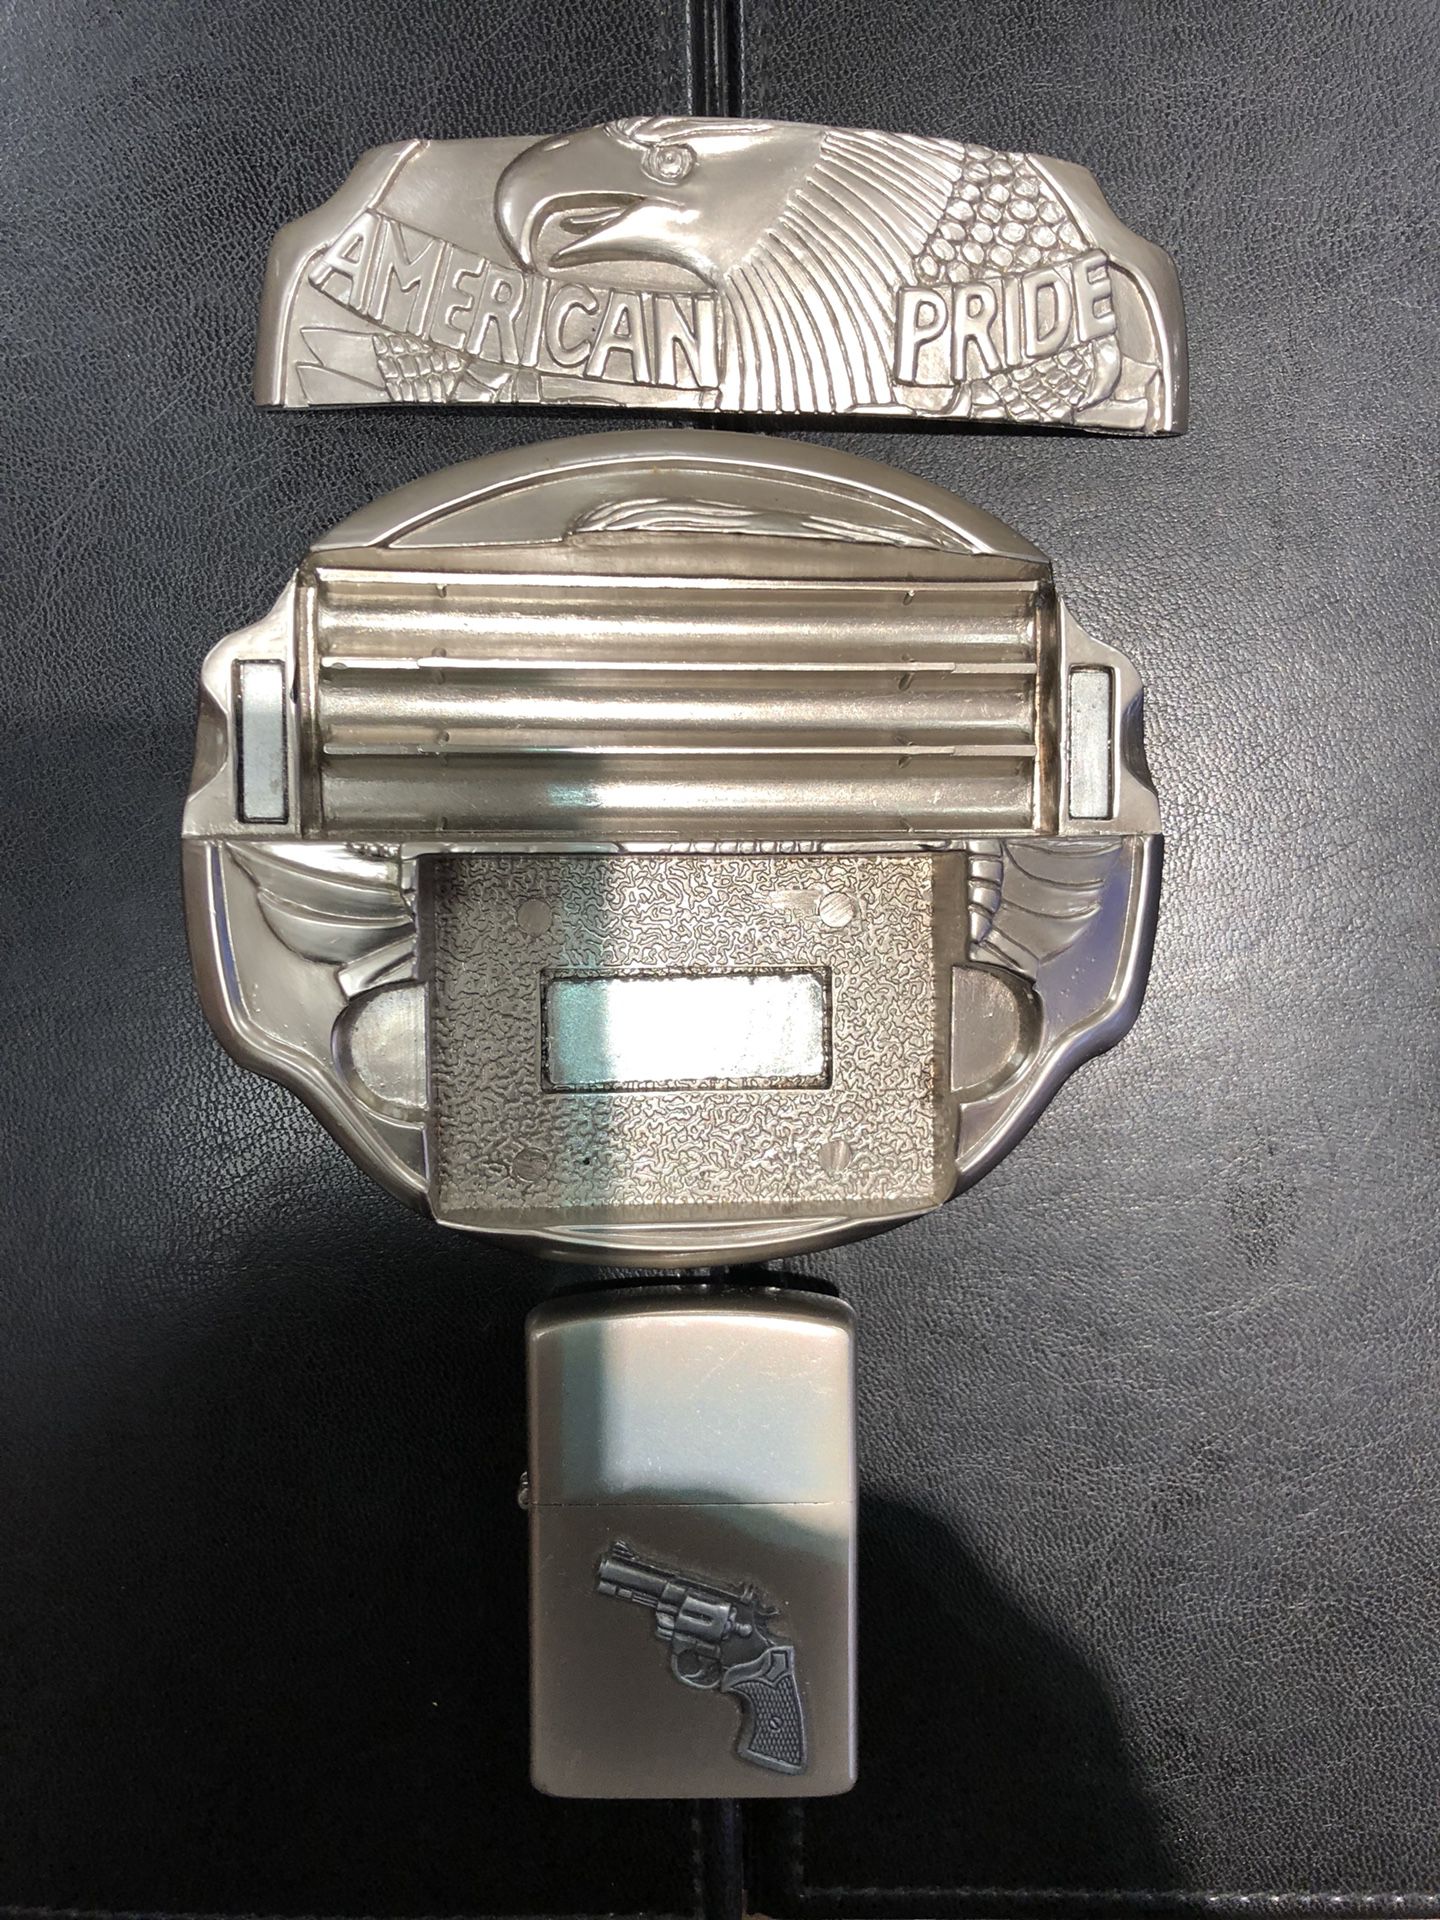 American Pride Sterling Silver Belt Buckle w/ cigarettes Lighter attachment, etc